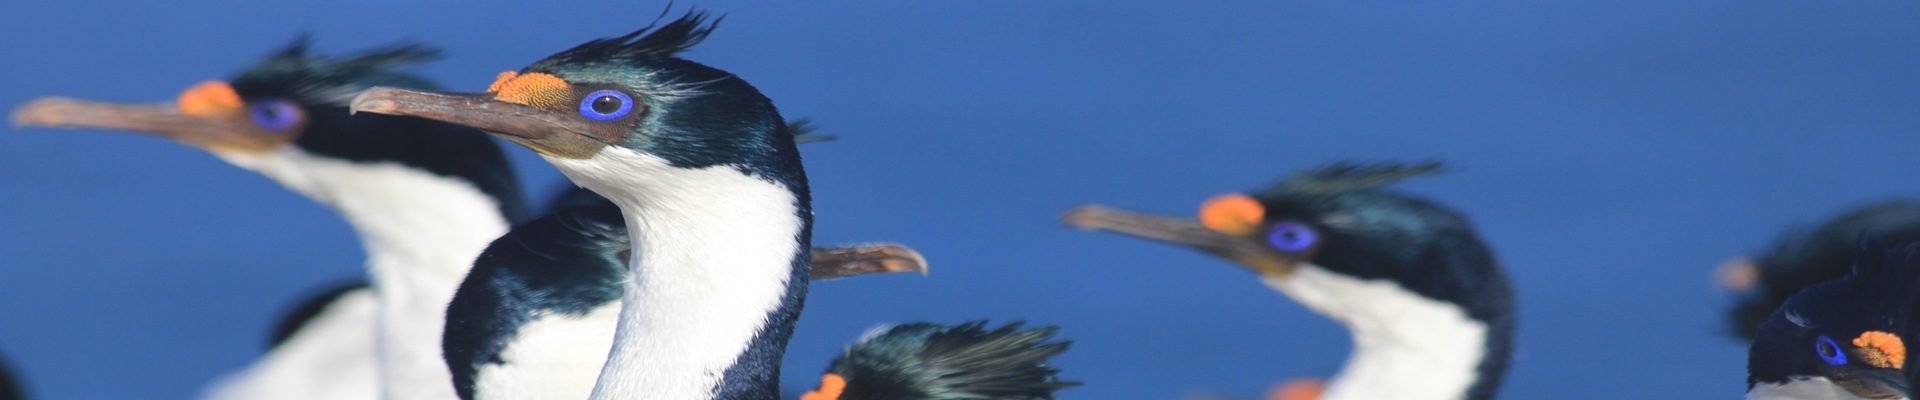 Antarctica Bird Expeditions - Penguins & More | Wildfoot Travel